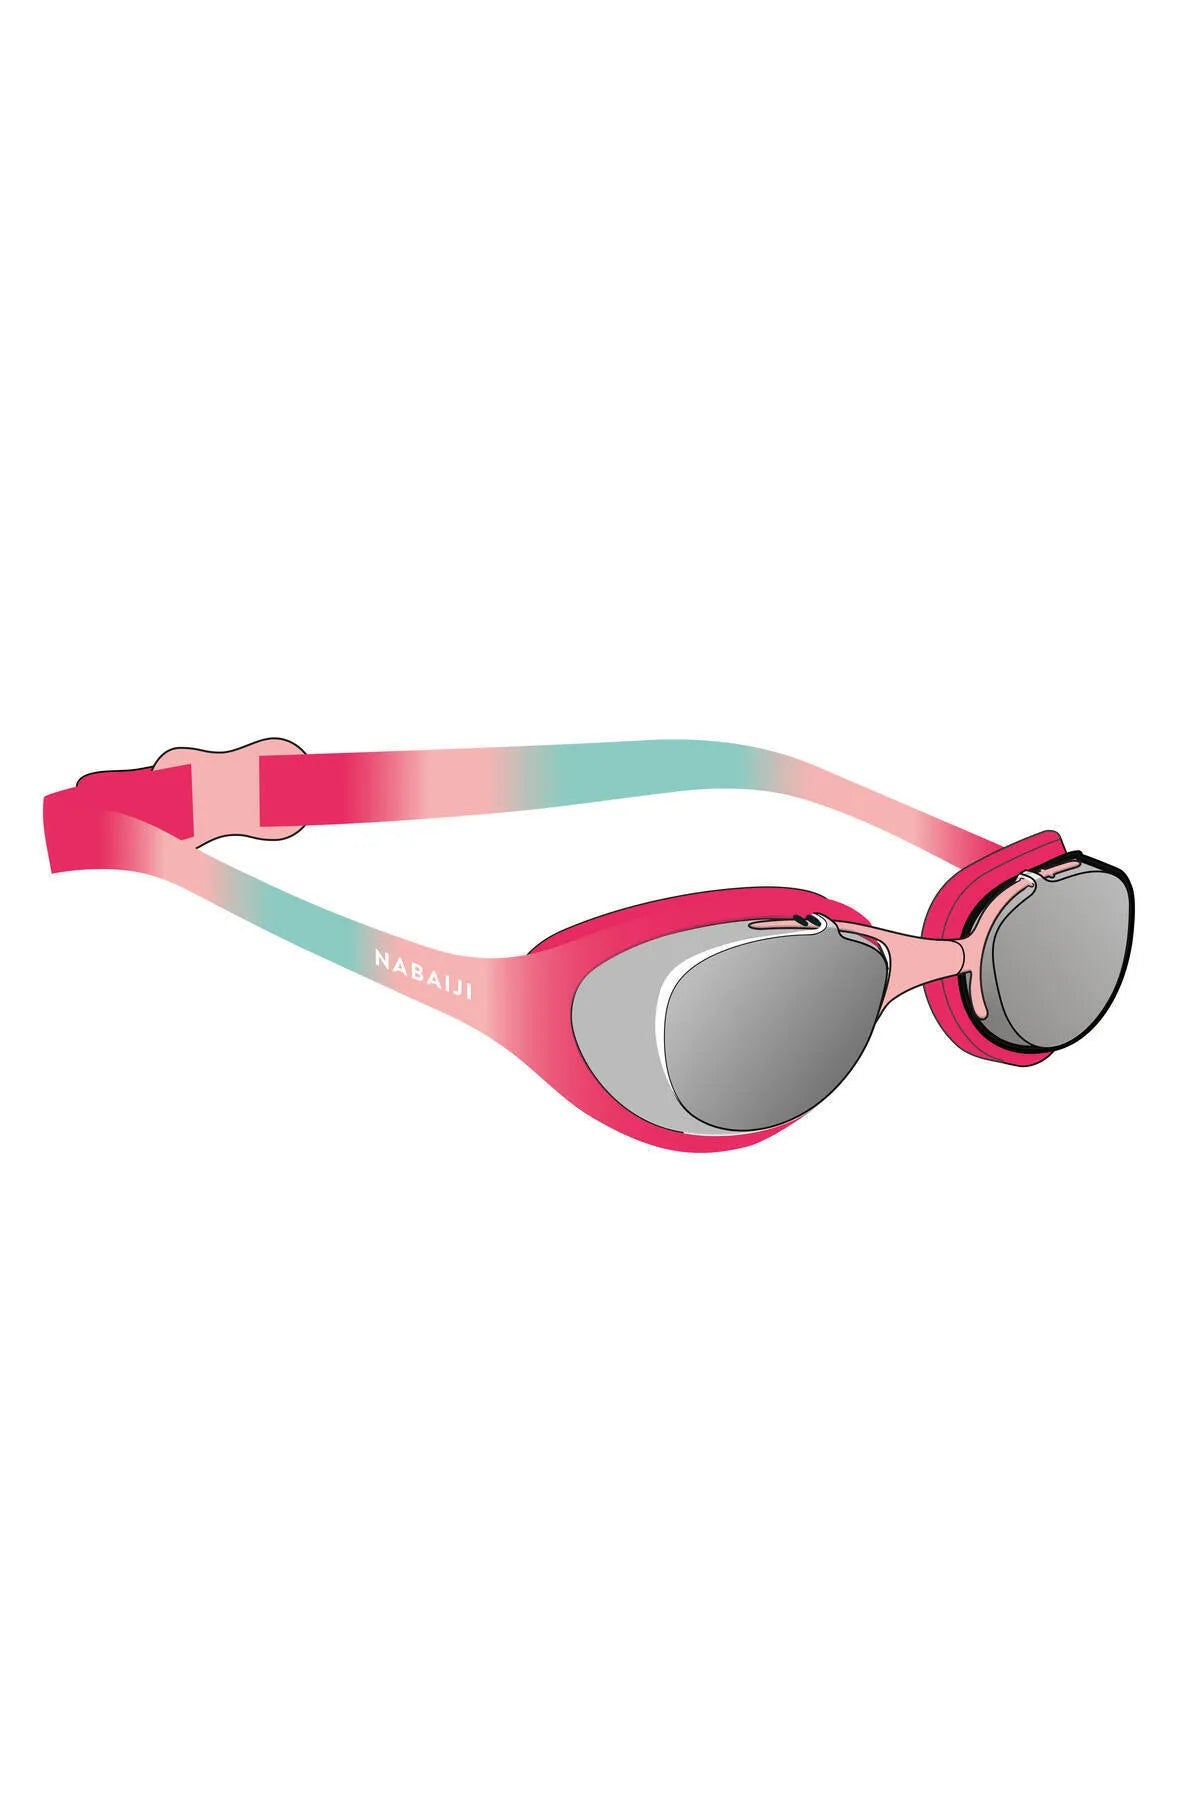 Nabaiji Swimming Goggles - Size S - Transparent Lenses - Pink - 100 Xbase Dye